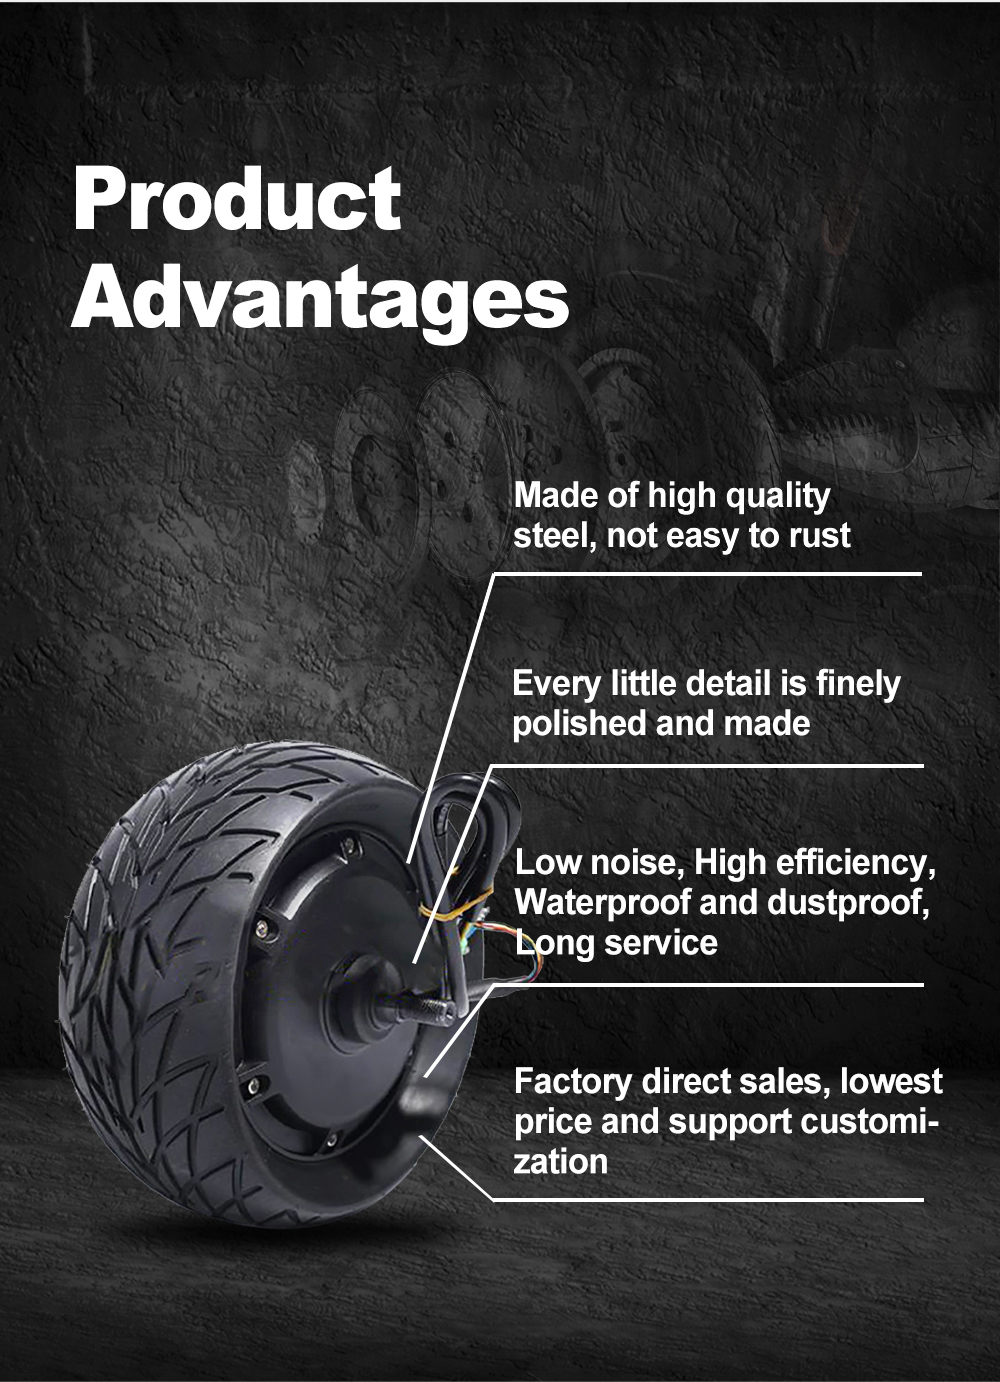 8 inch geard hub motor advantages